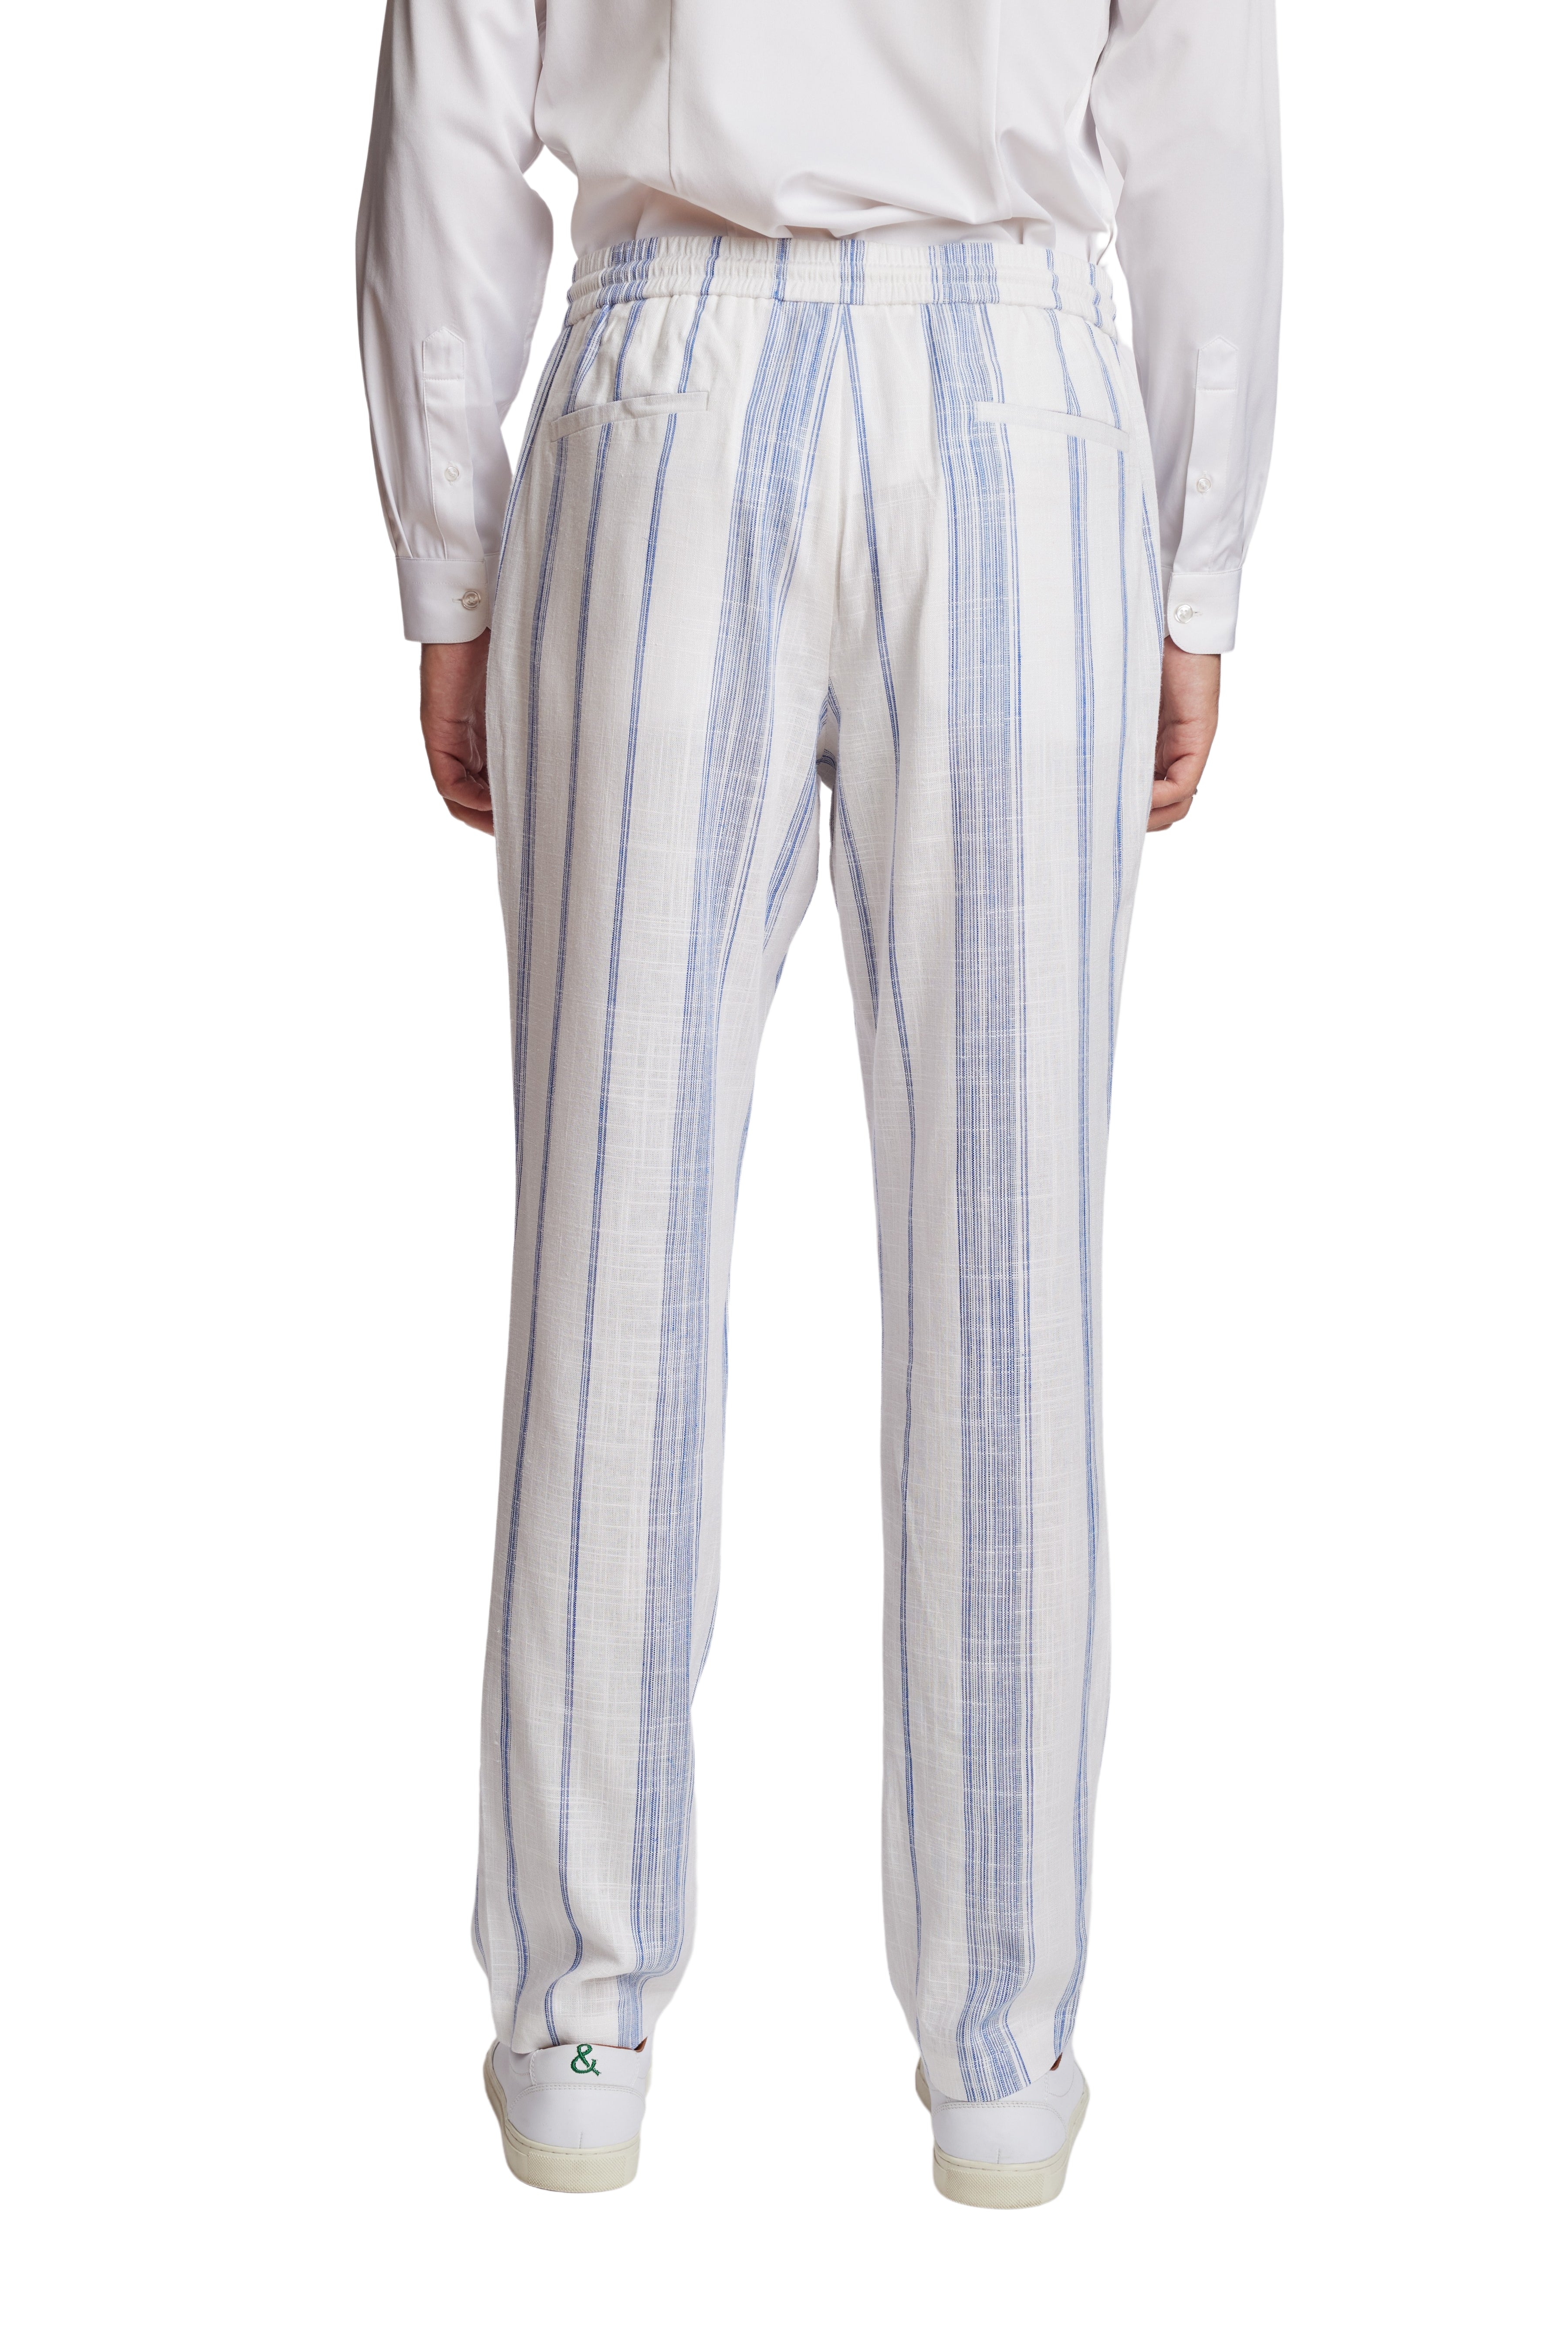 Chester Drawstring Pants - slim - White & Blue Variegated